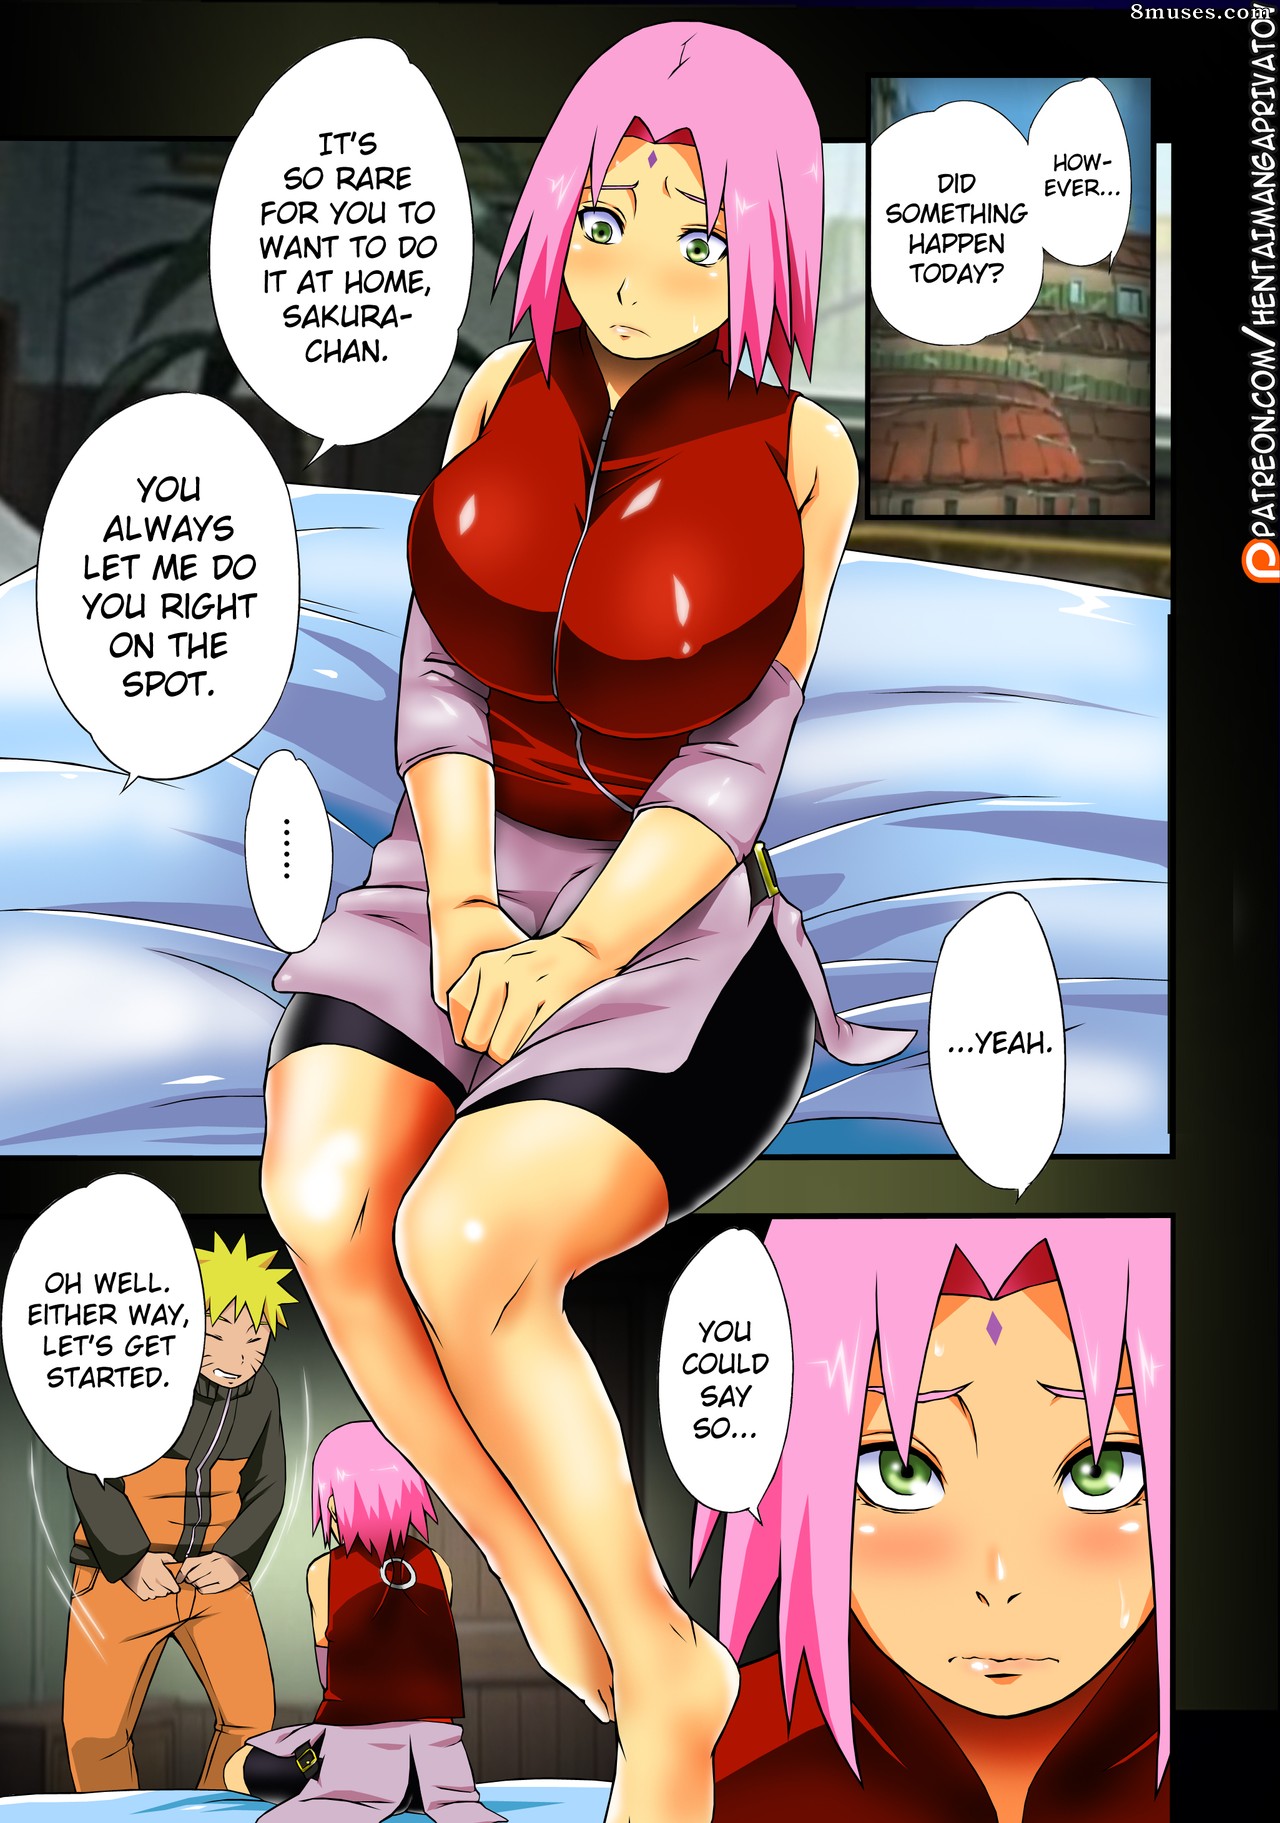 Sakura sex manga